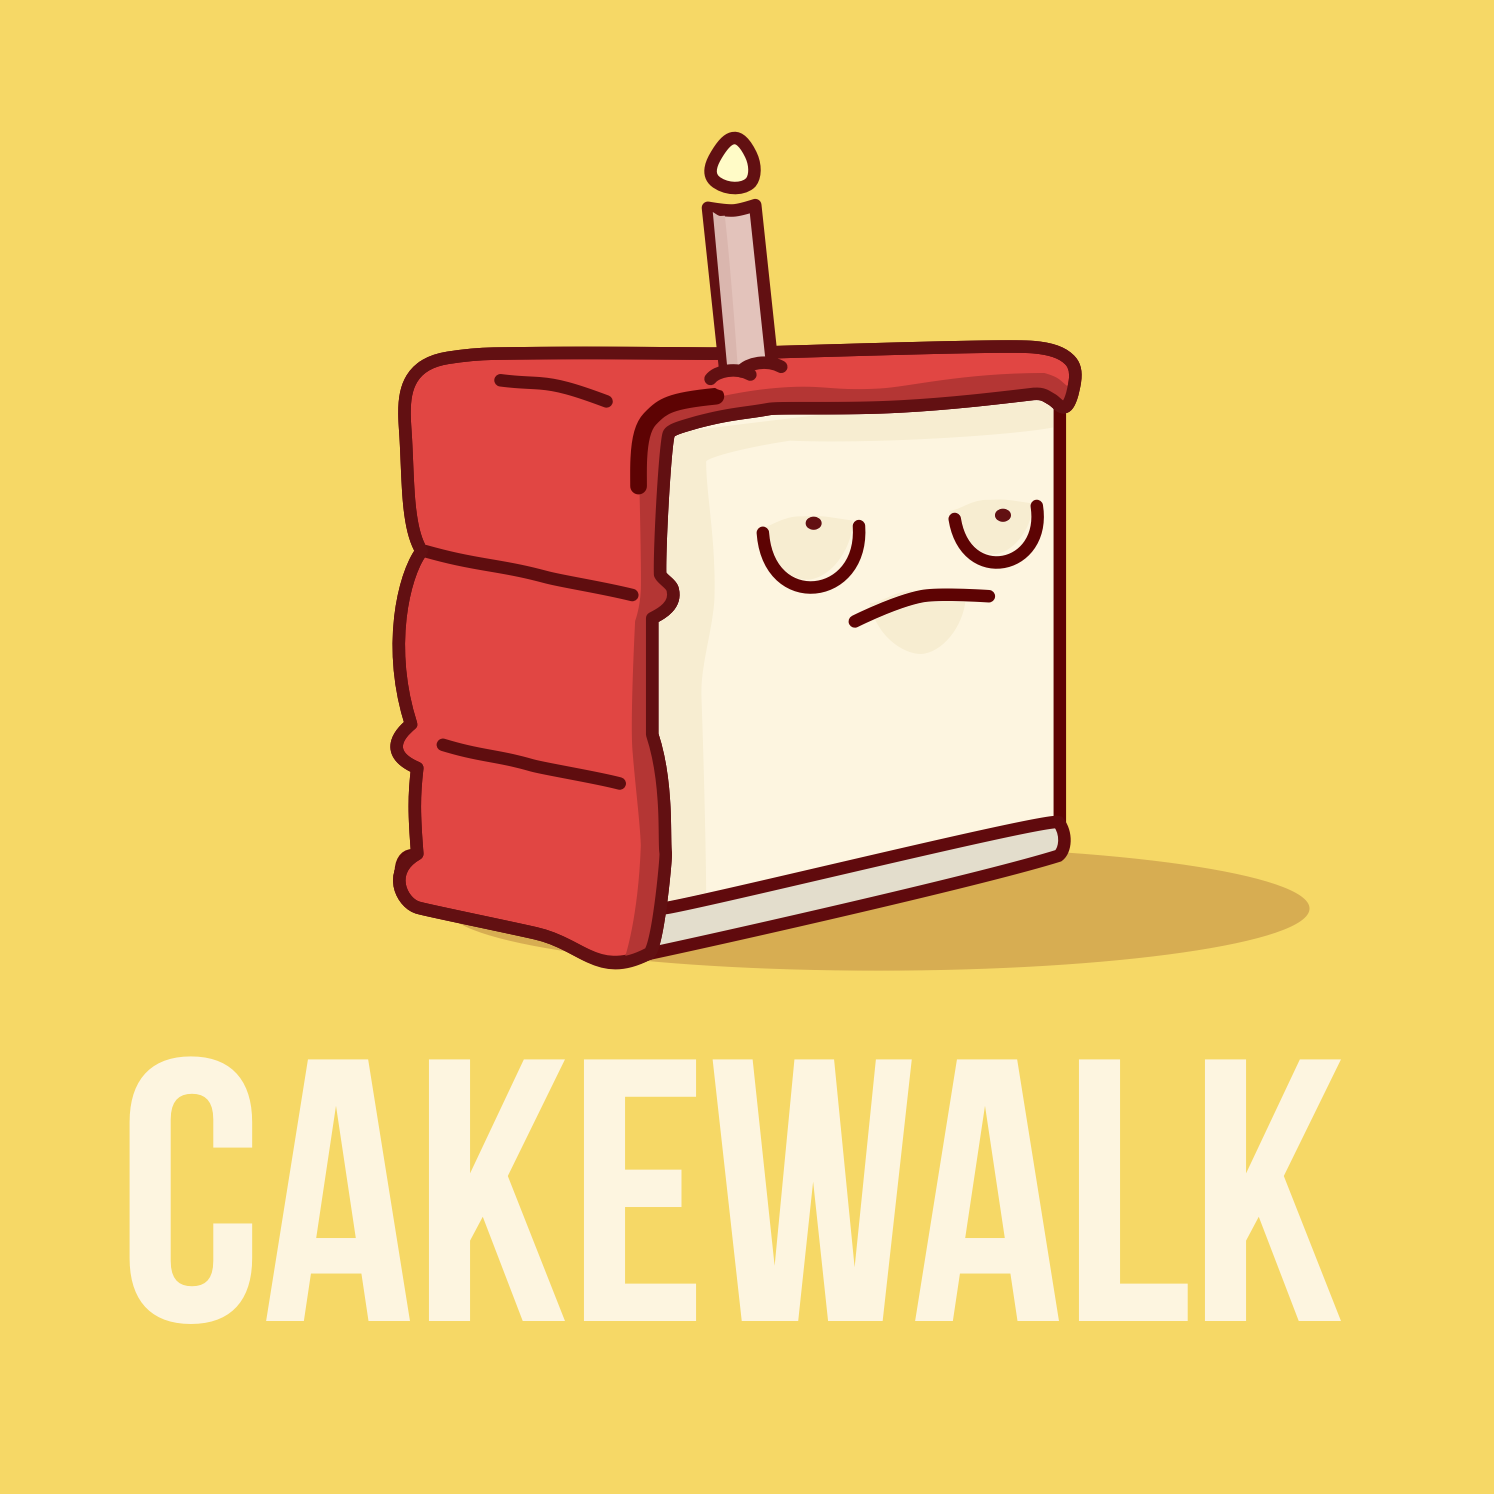 cakewalk app for windows 10